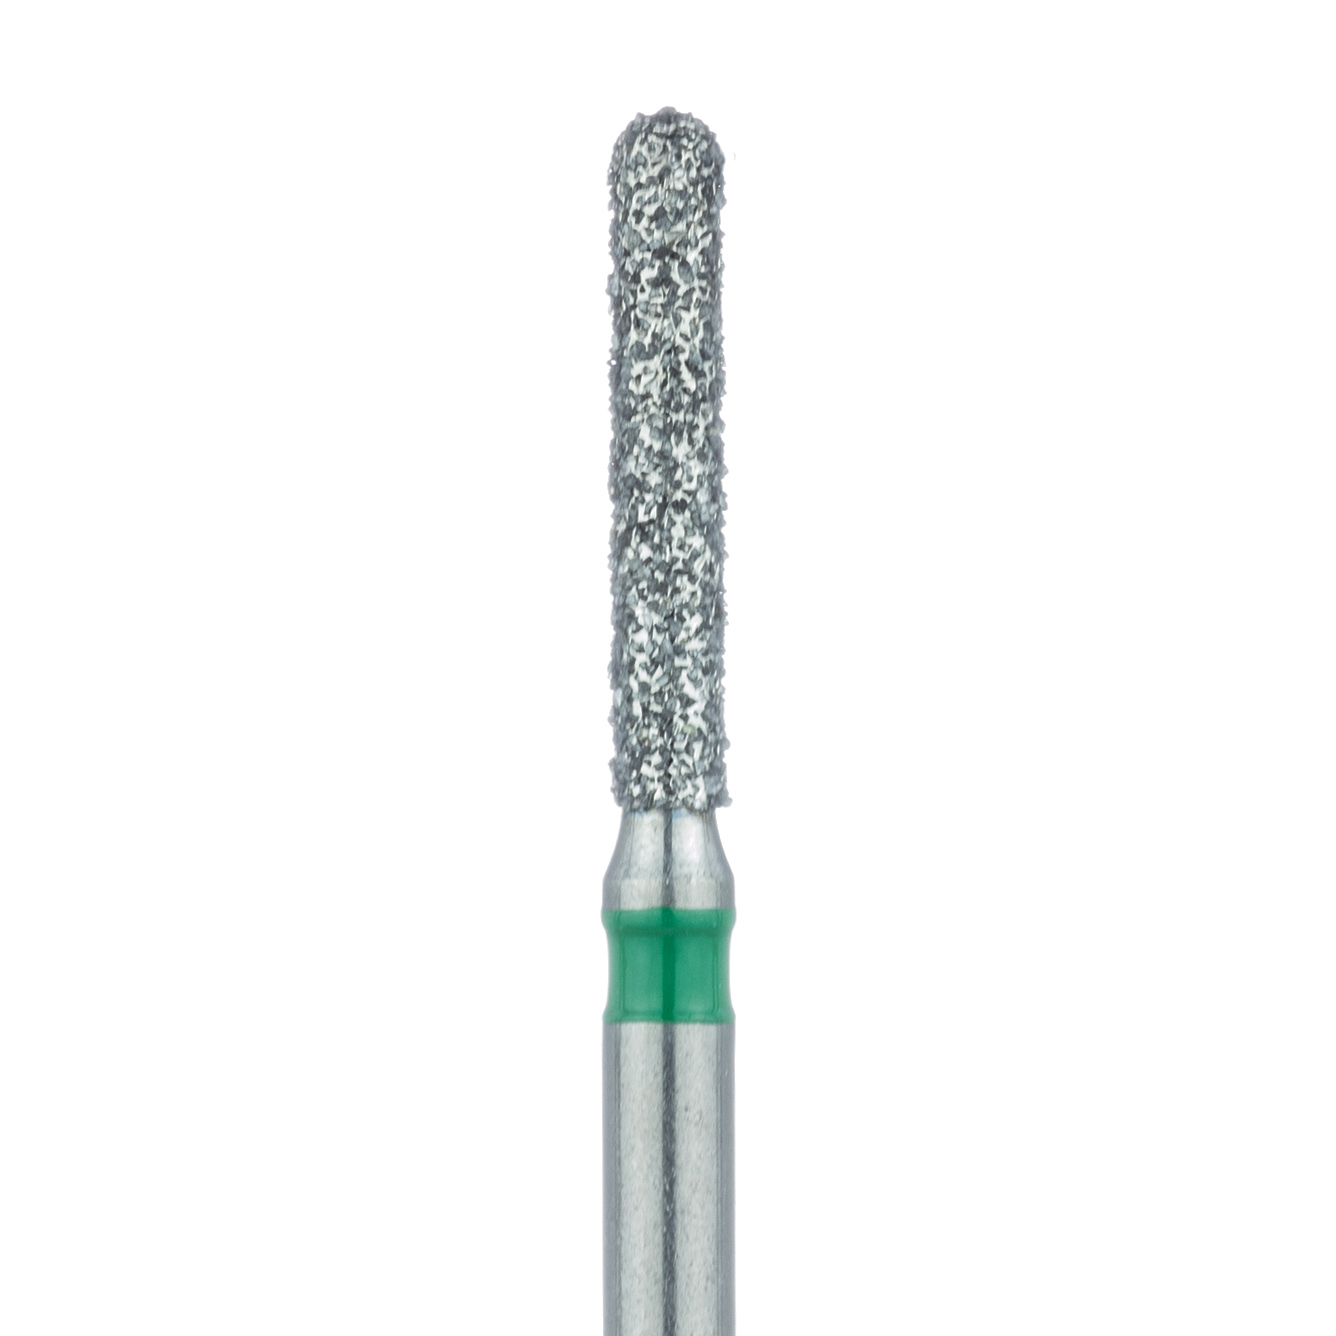 881G-014-FG Round End Cylinder Diamond Bur, 1.4mm Ø, Coarse, FG